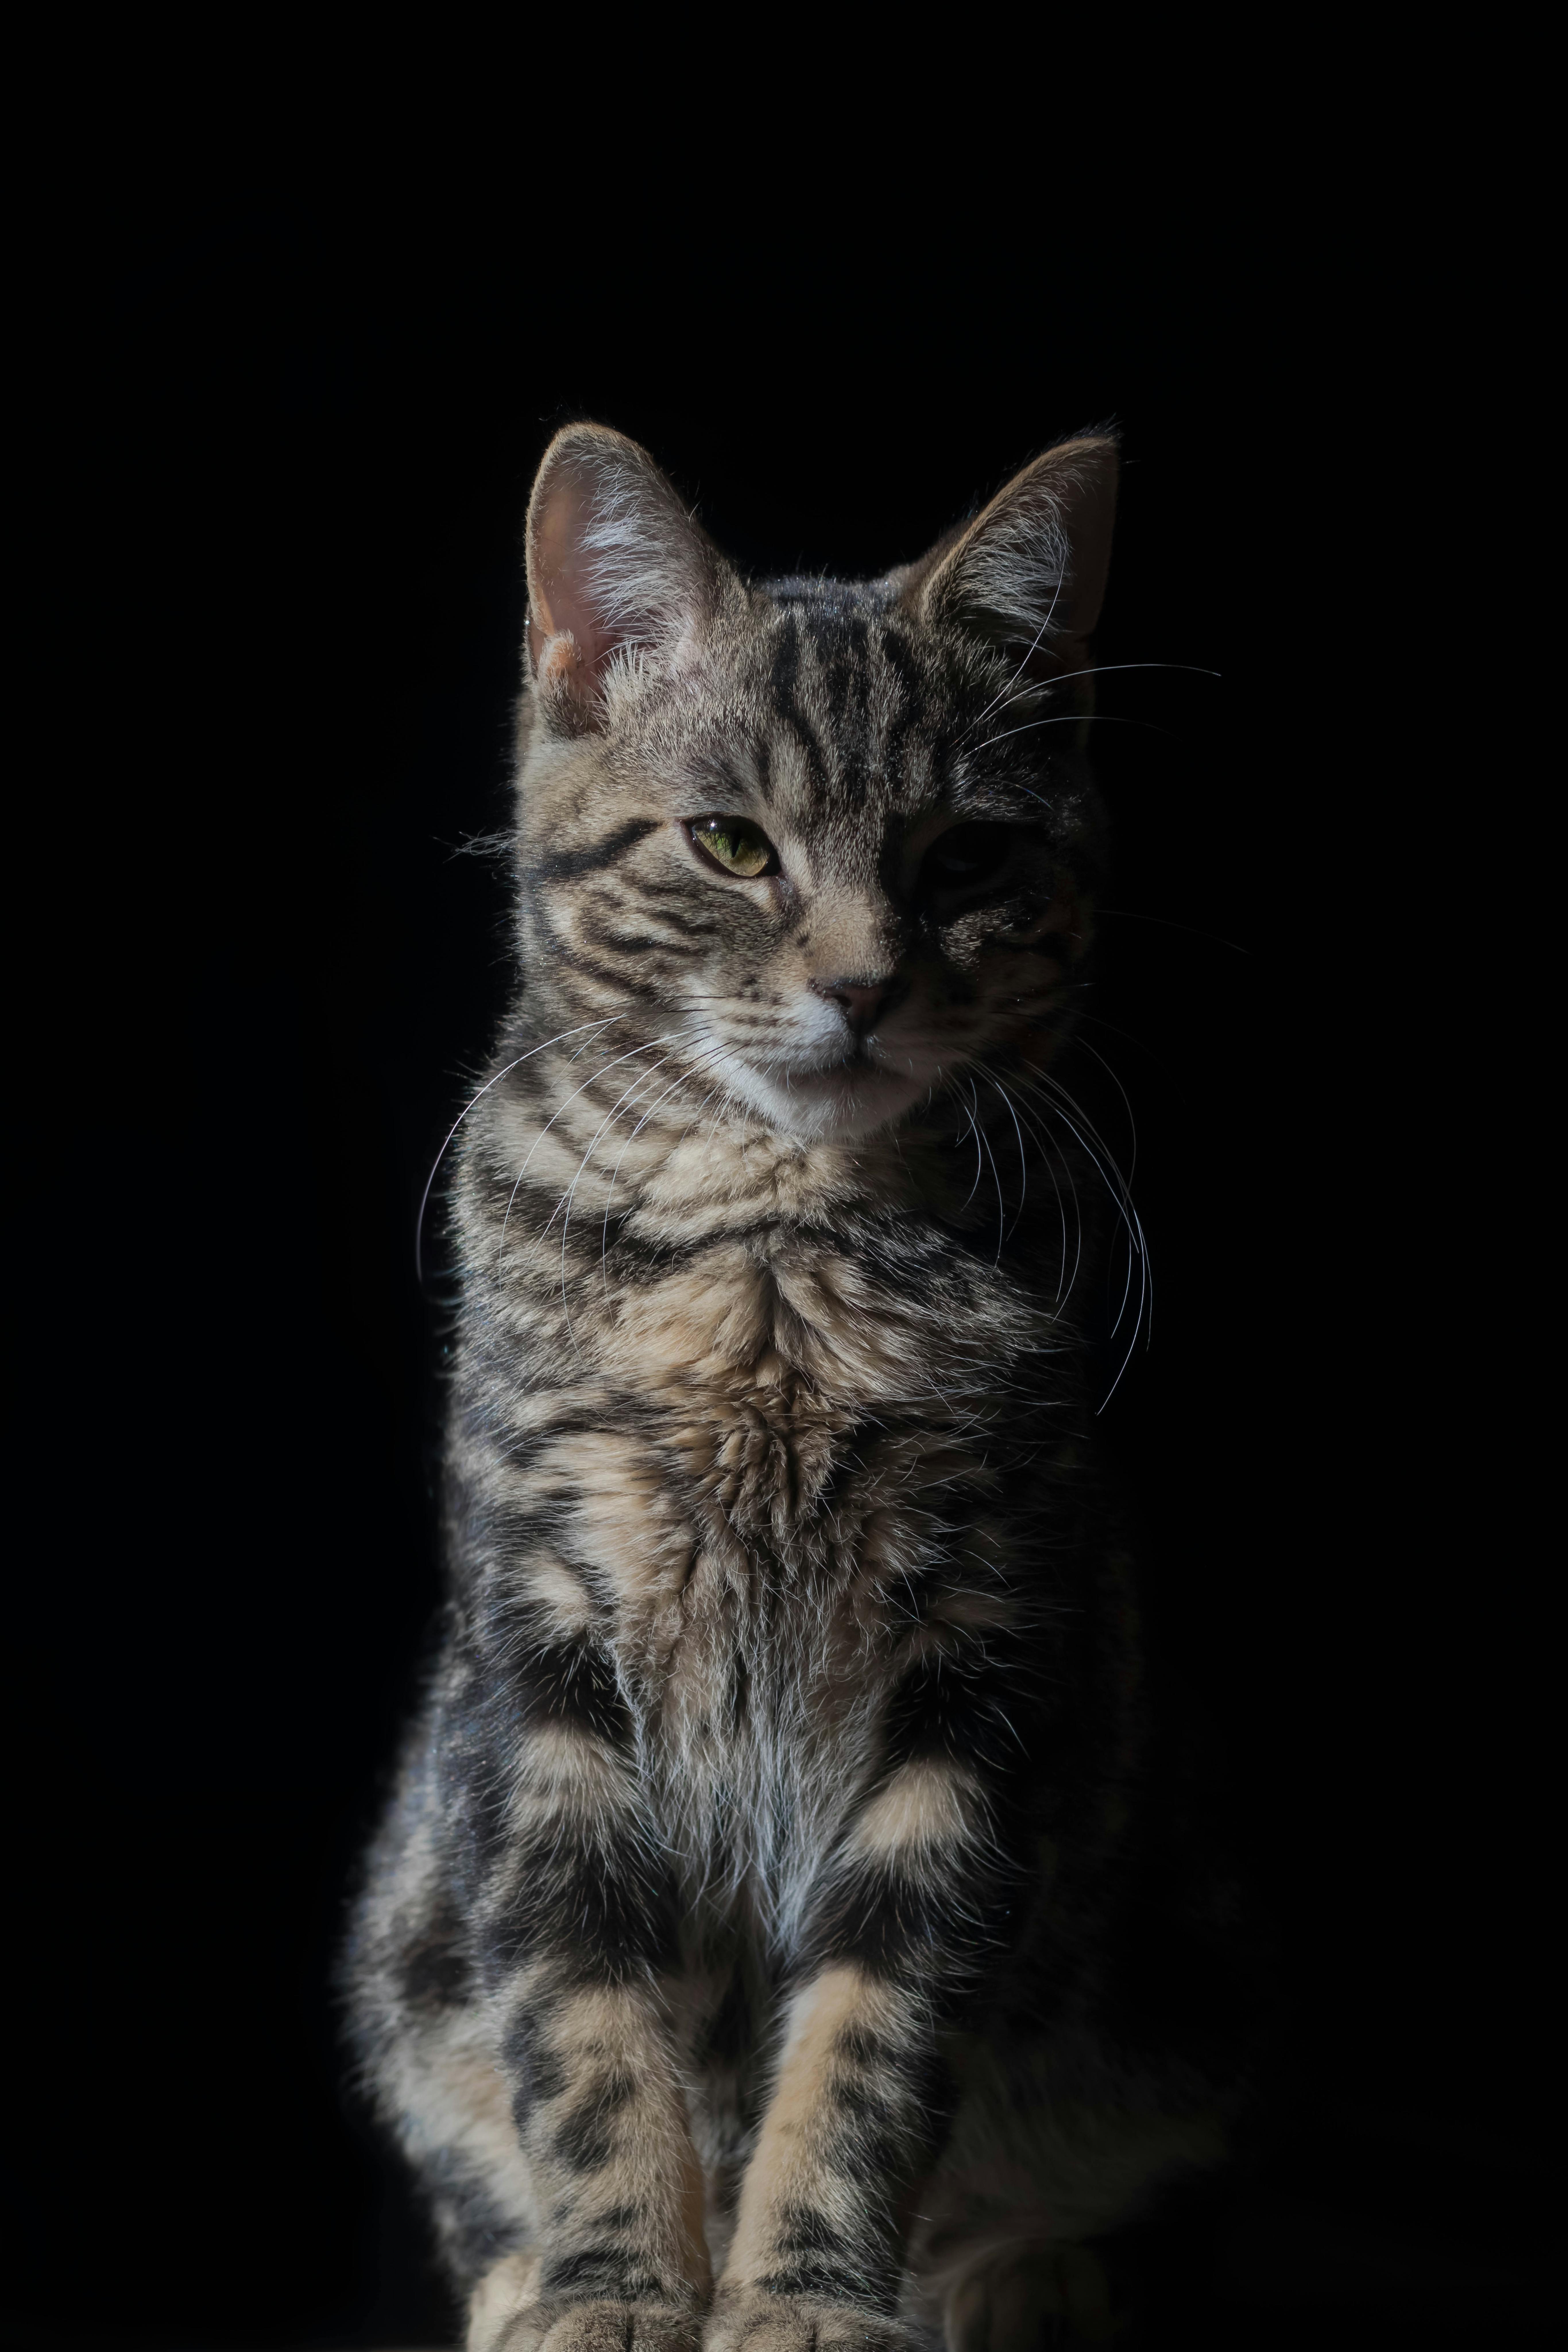 Cat Against Black Background · Free Stock Photo